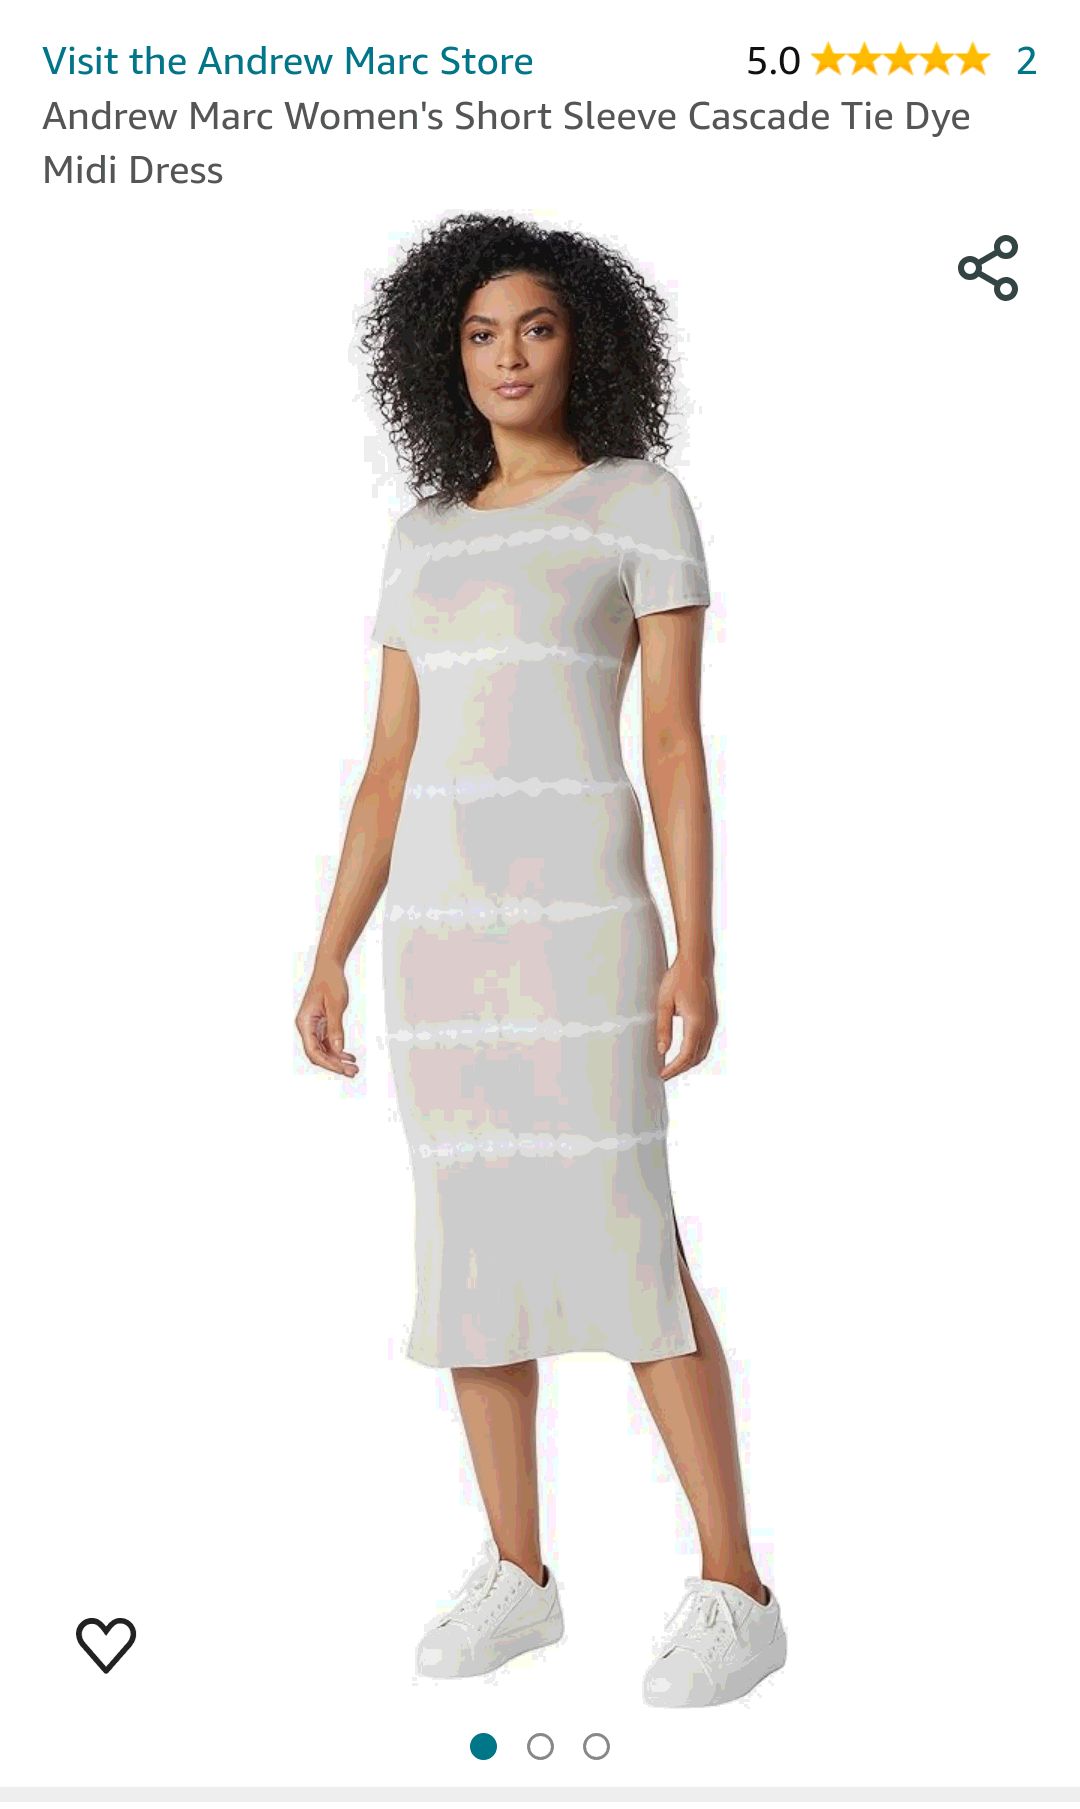 Andrew Marc Women's Short Sleeve Cascade Tie Dye Midi Dress, Sand, Small at Amazon Women’s Clothing store